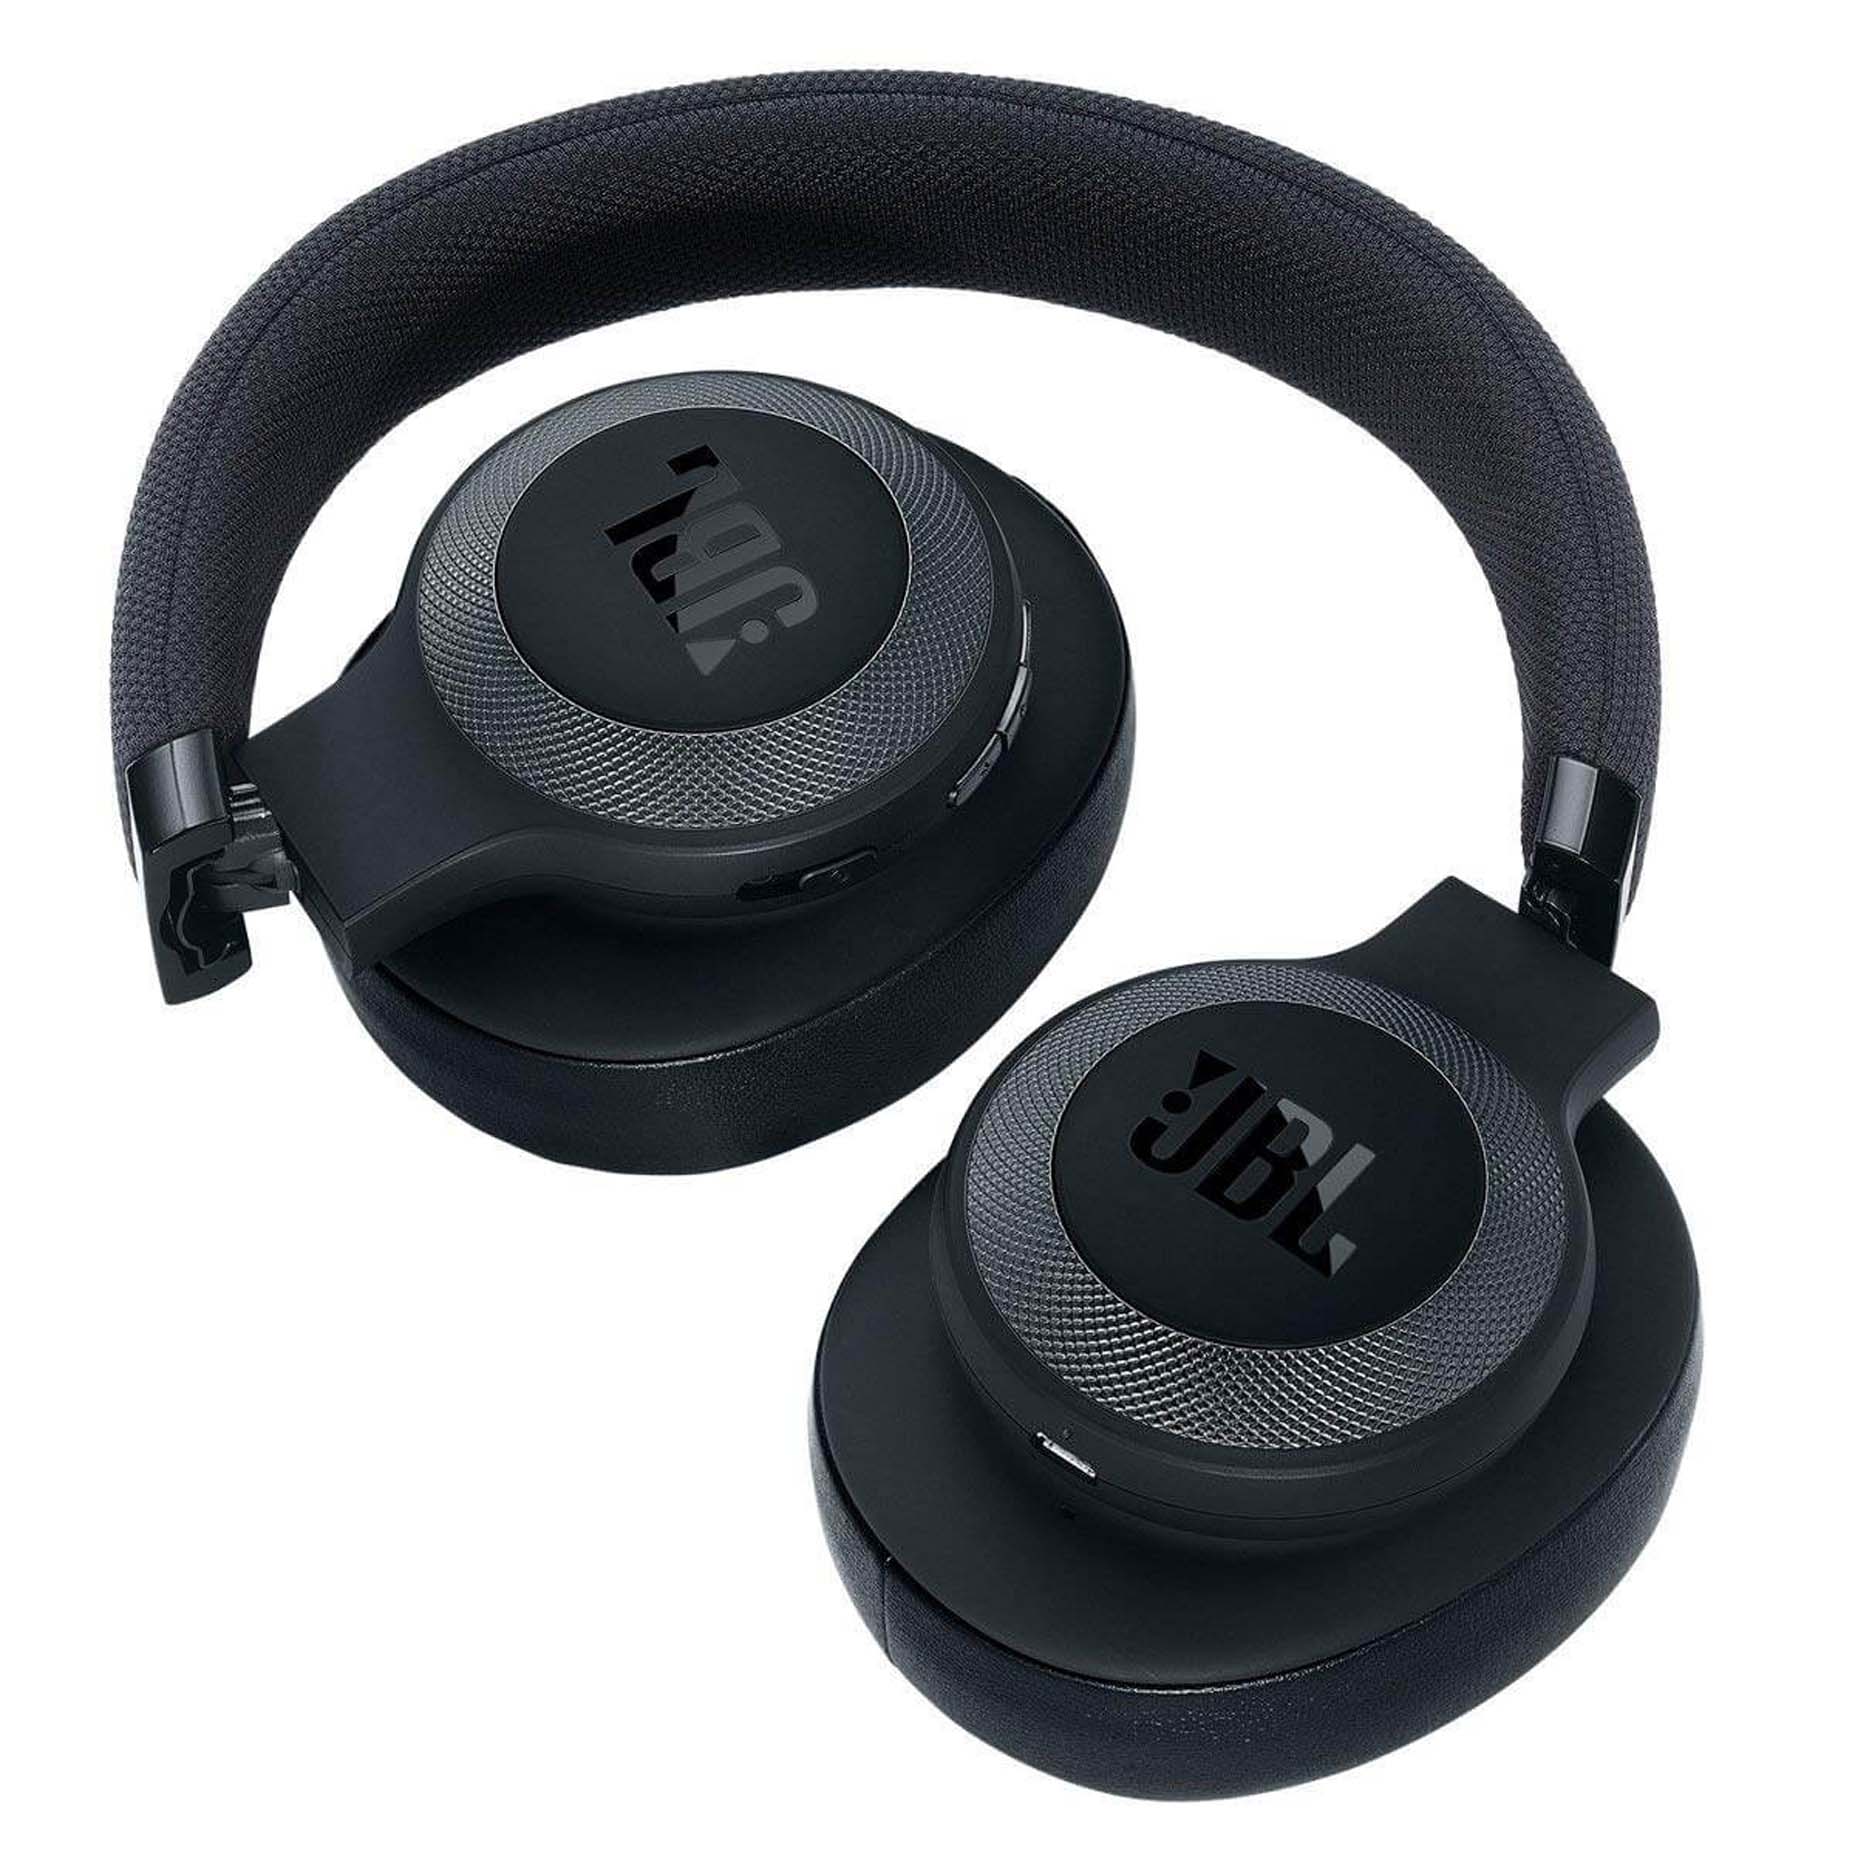 Harga JBL E65BTNC Headphone over-ear nirkabel with noise-cancelling